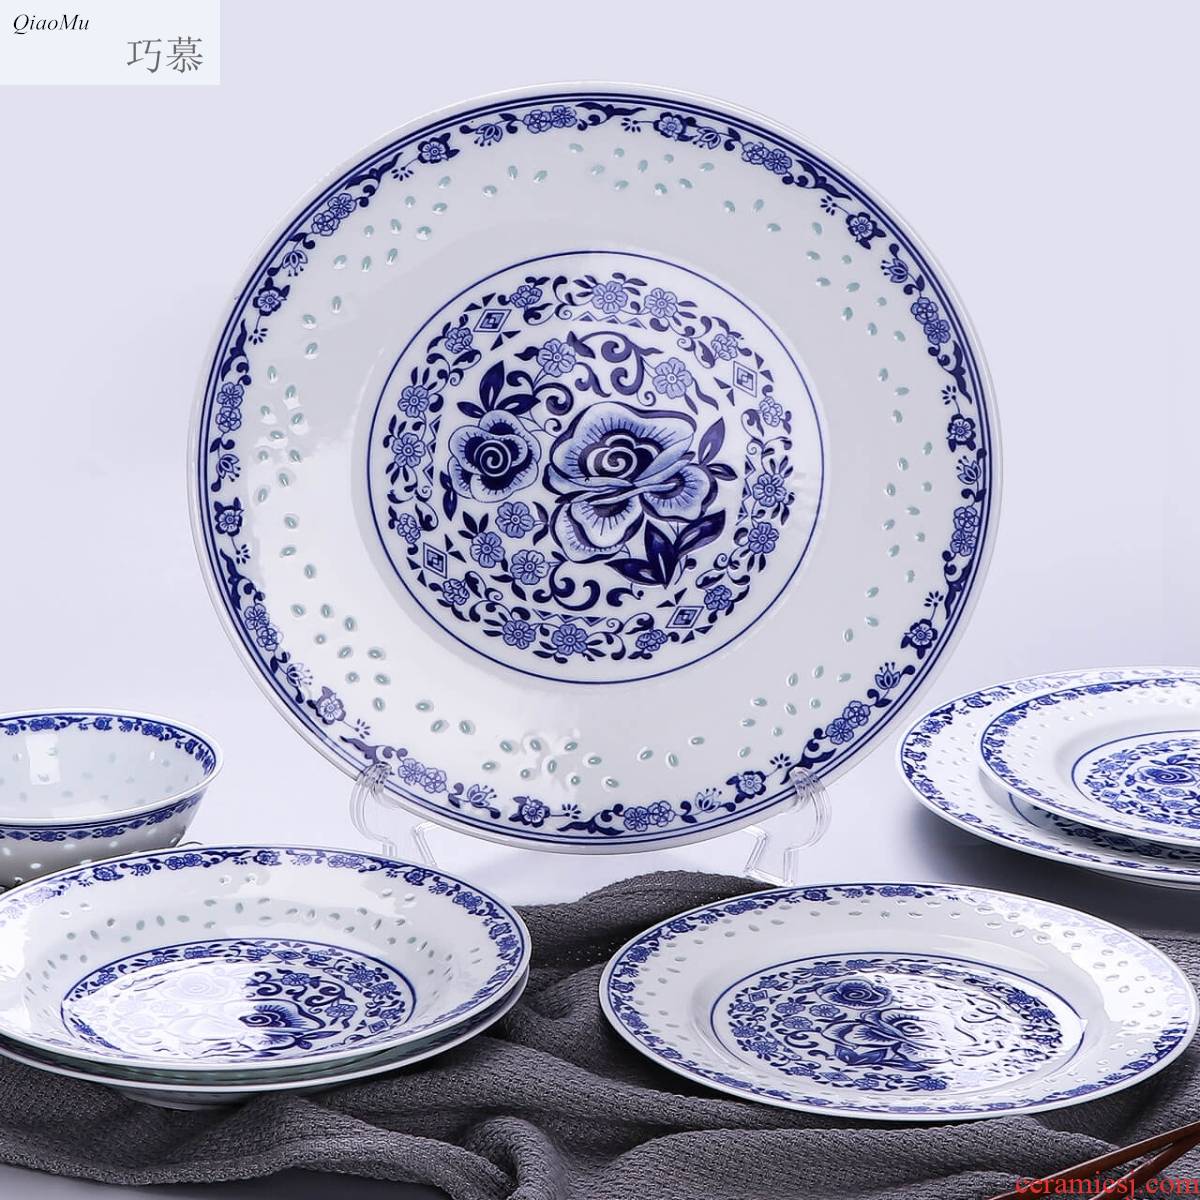 Qiao mu jingdezhen porcelain and ceramic dish dish dish 8 inches large capacity MeiYing soup dish plates